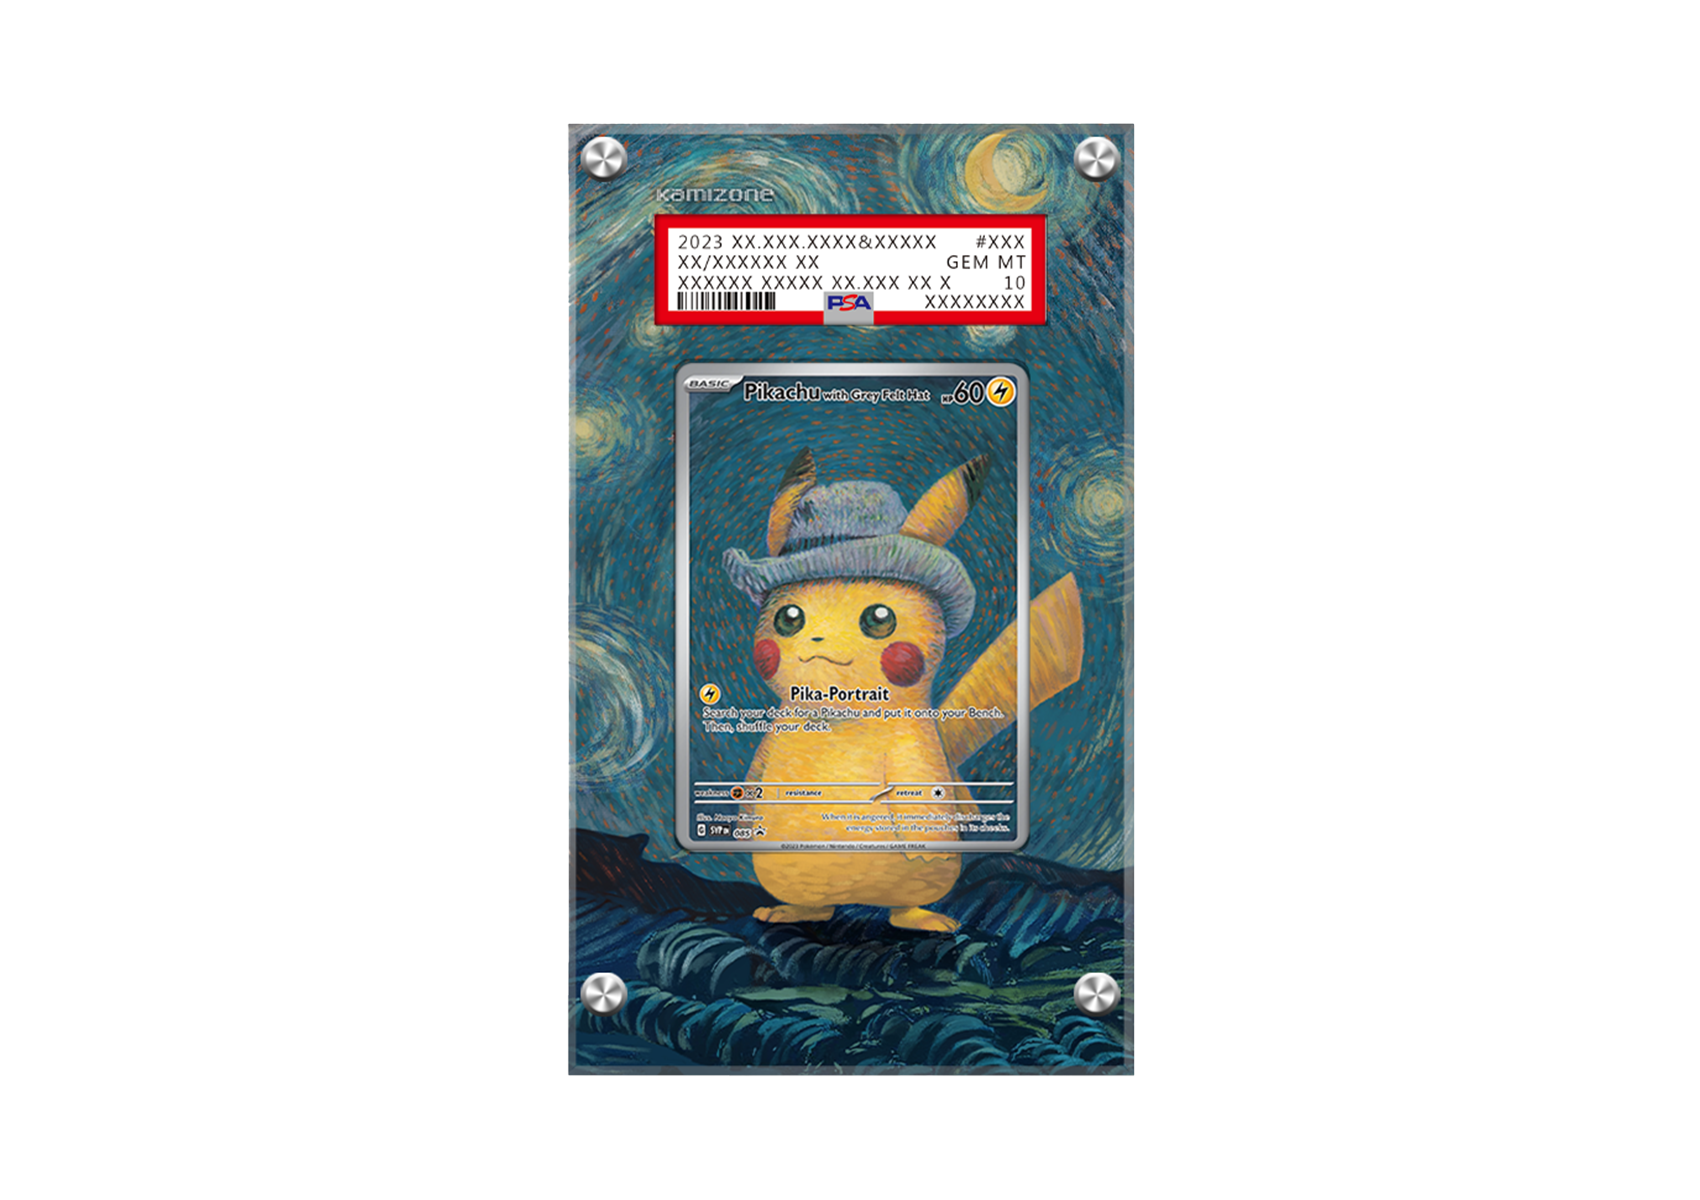 Pikachu with a Grey Felt Hat - Van Gogh Promo - PSA Card Case